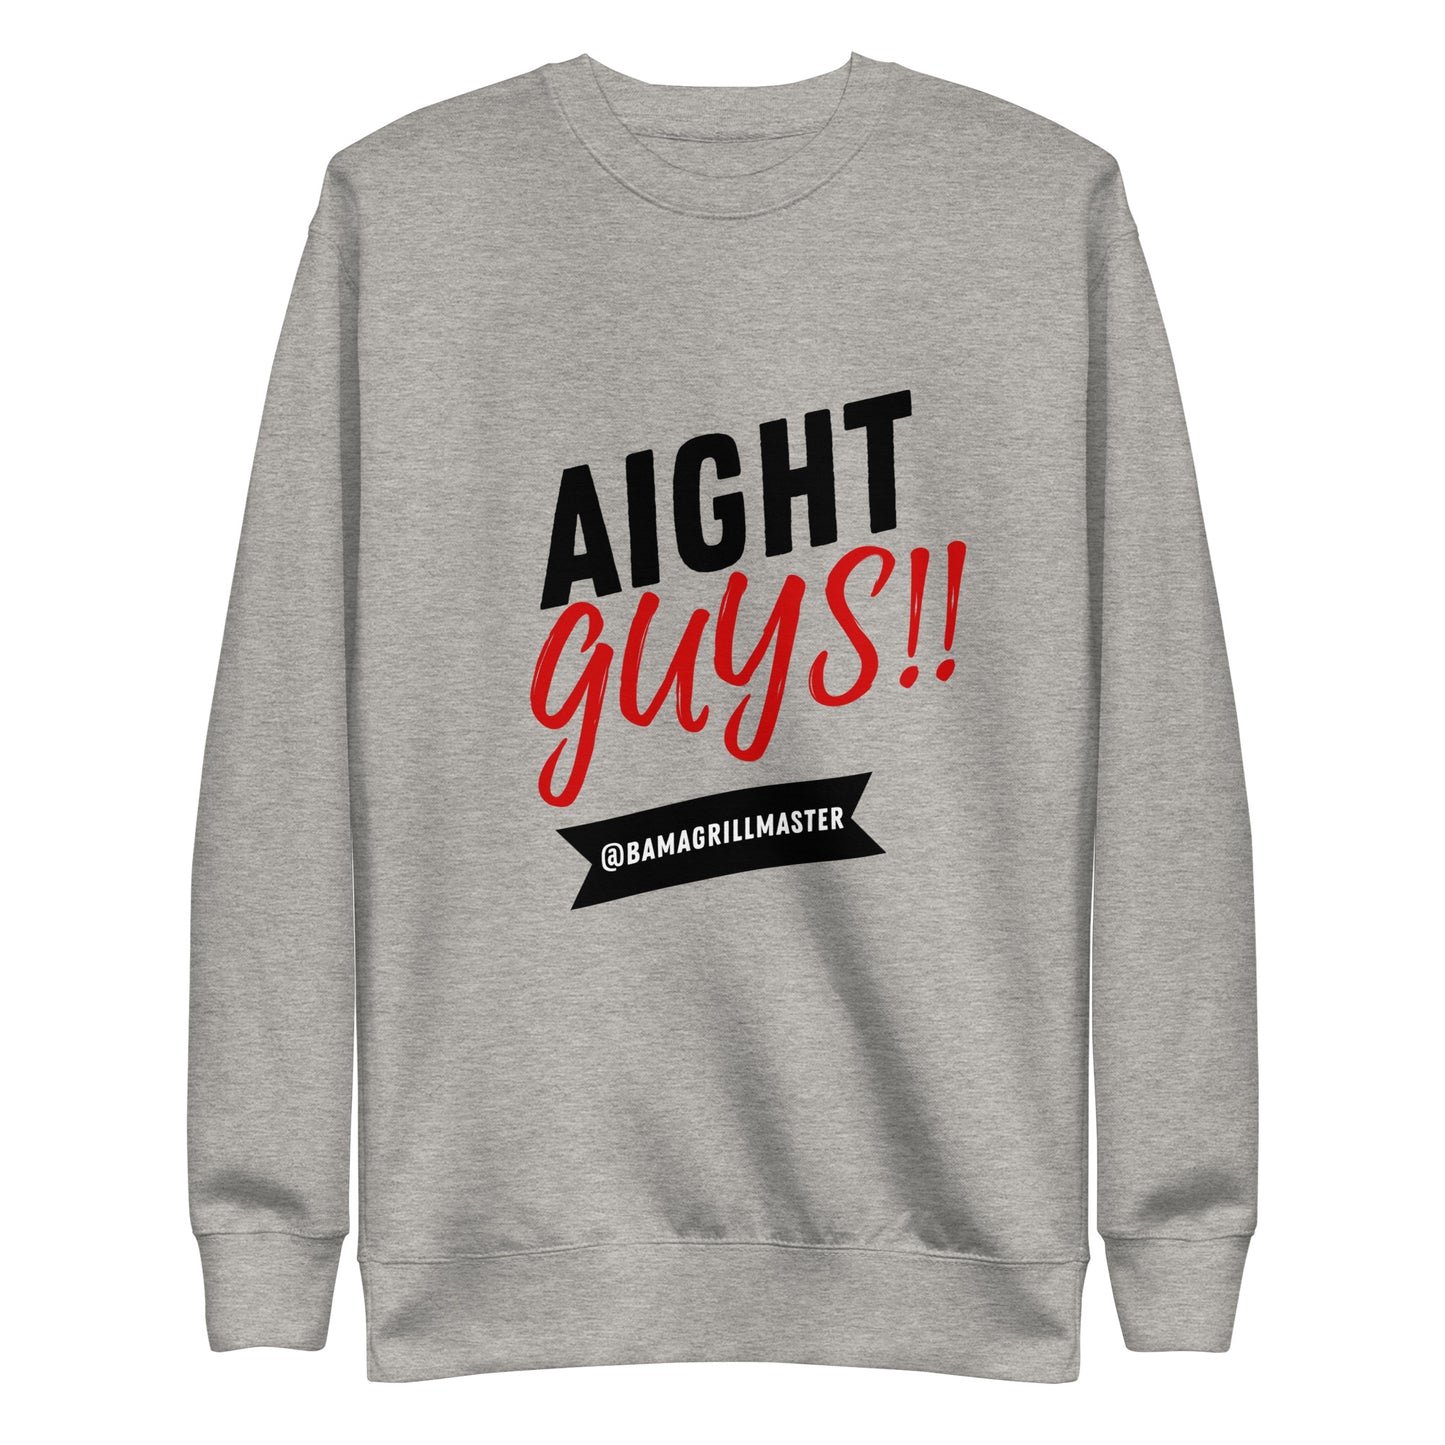 "Aight Guys!!" Crew Neck Sweatshirt